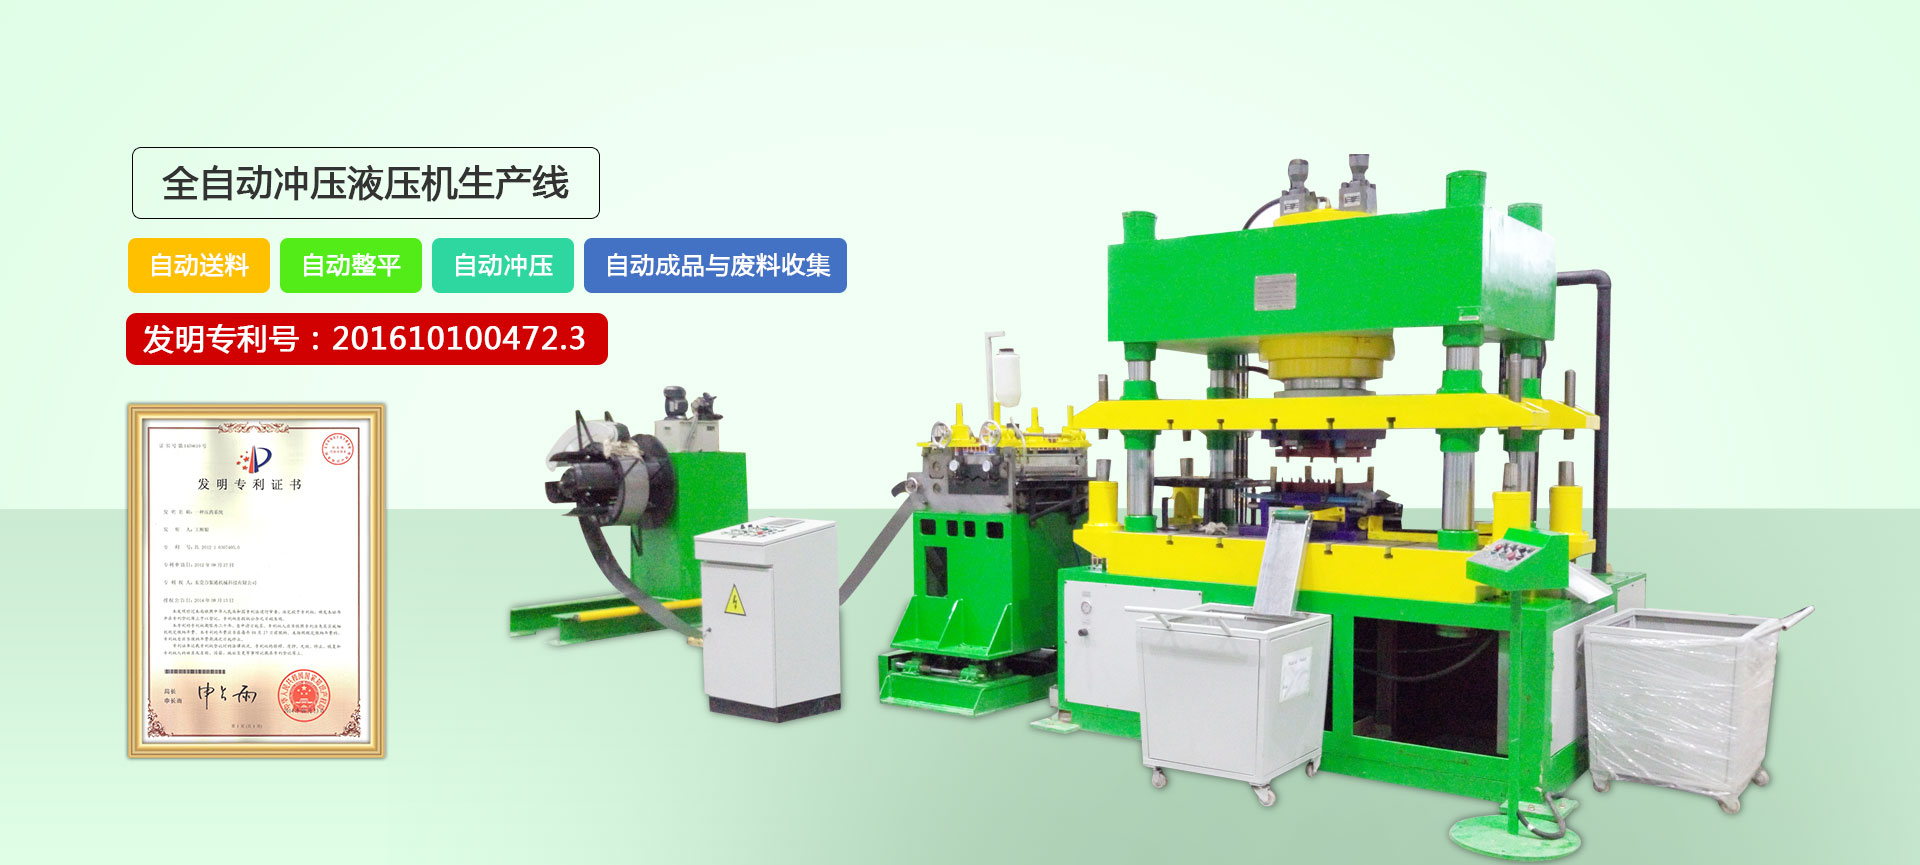 Hydraulic Press Line Applications